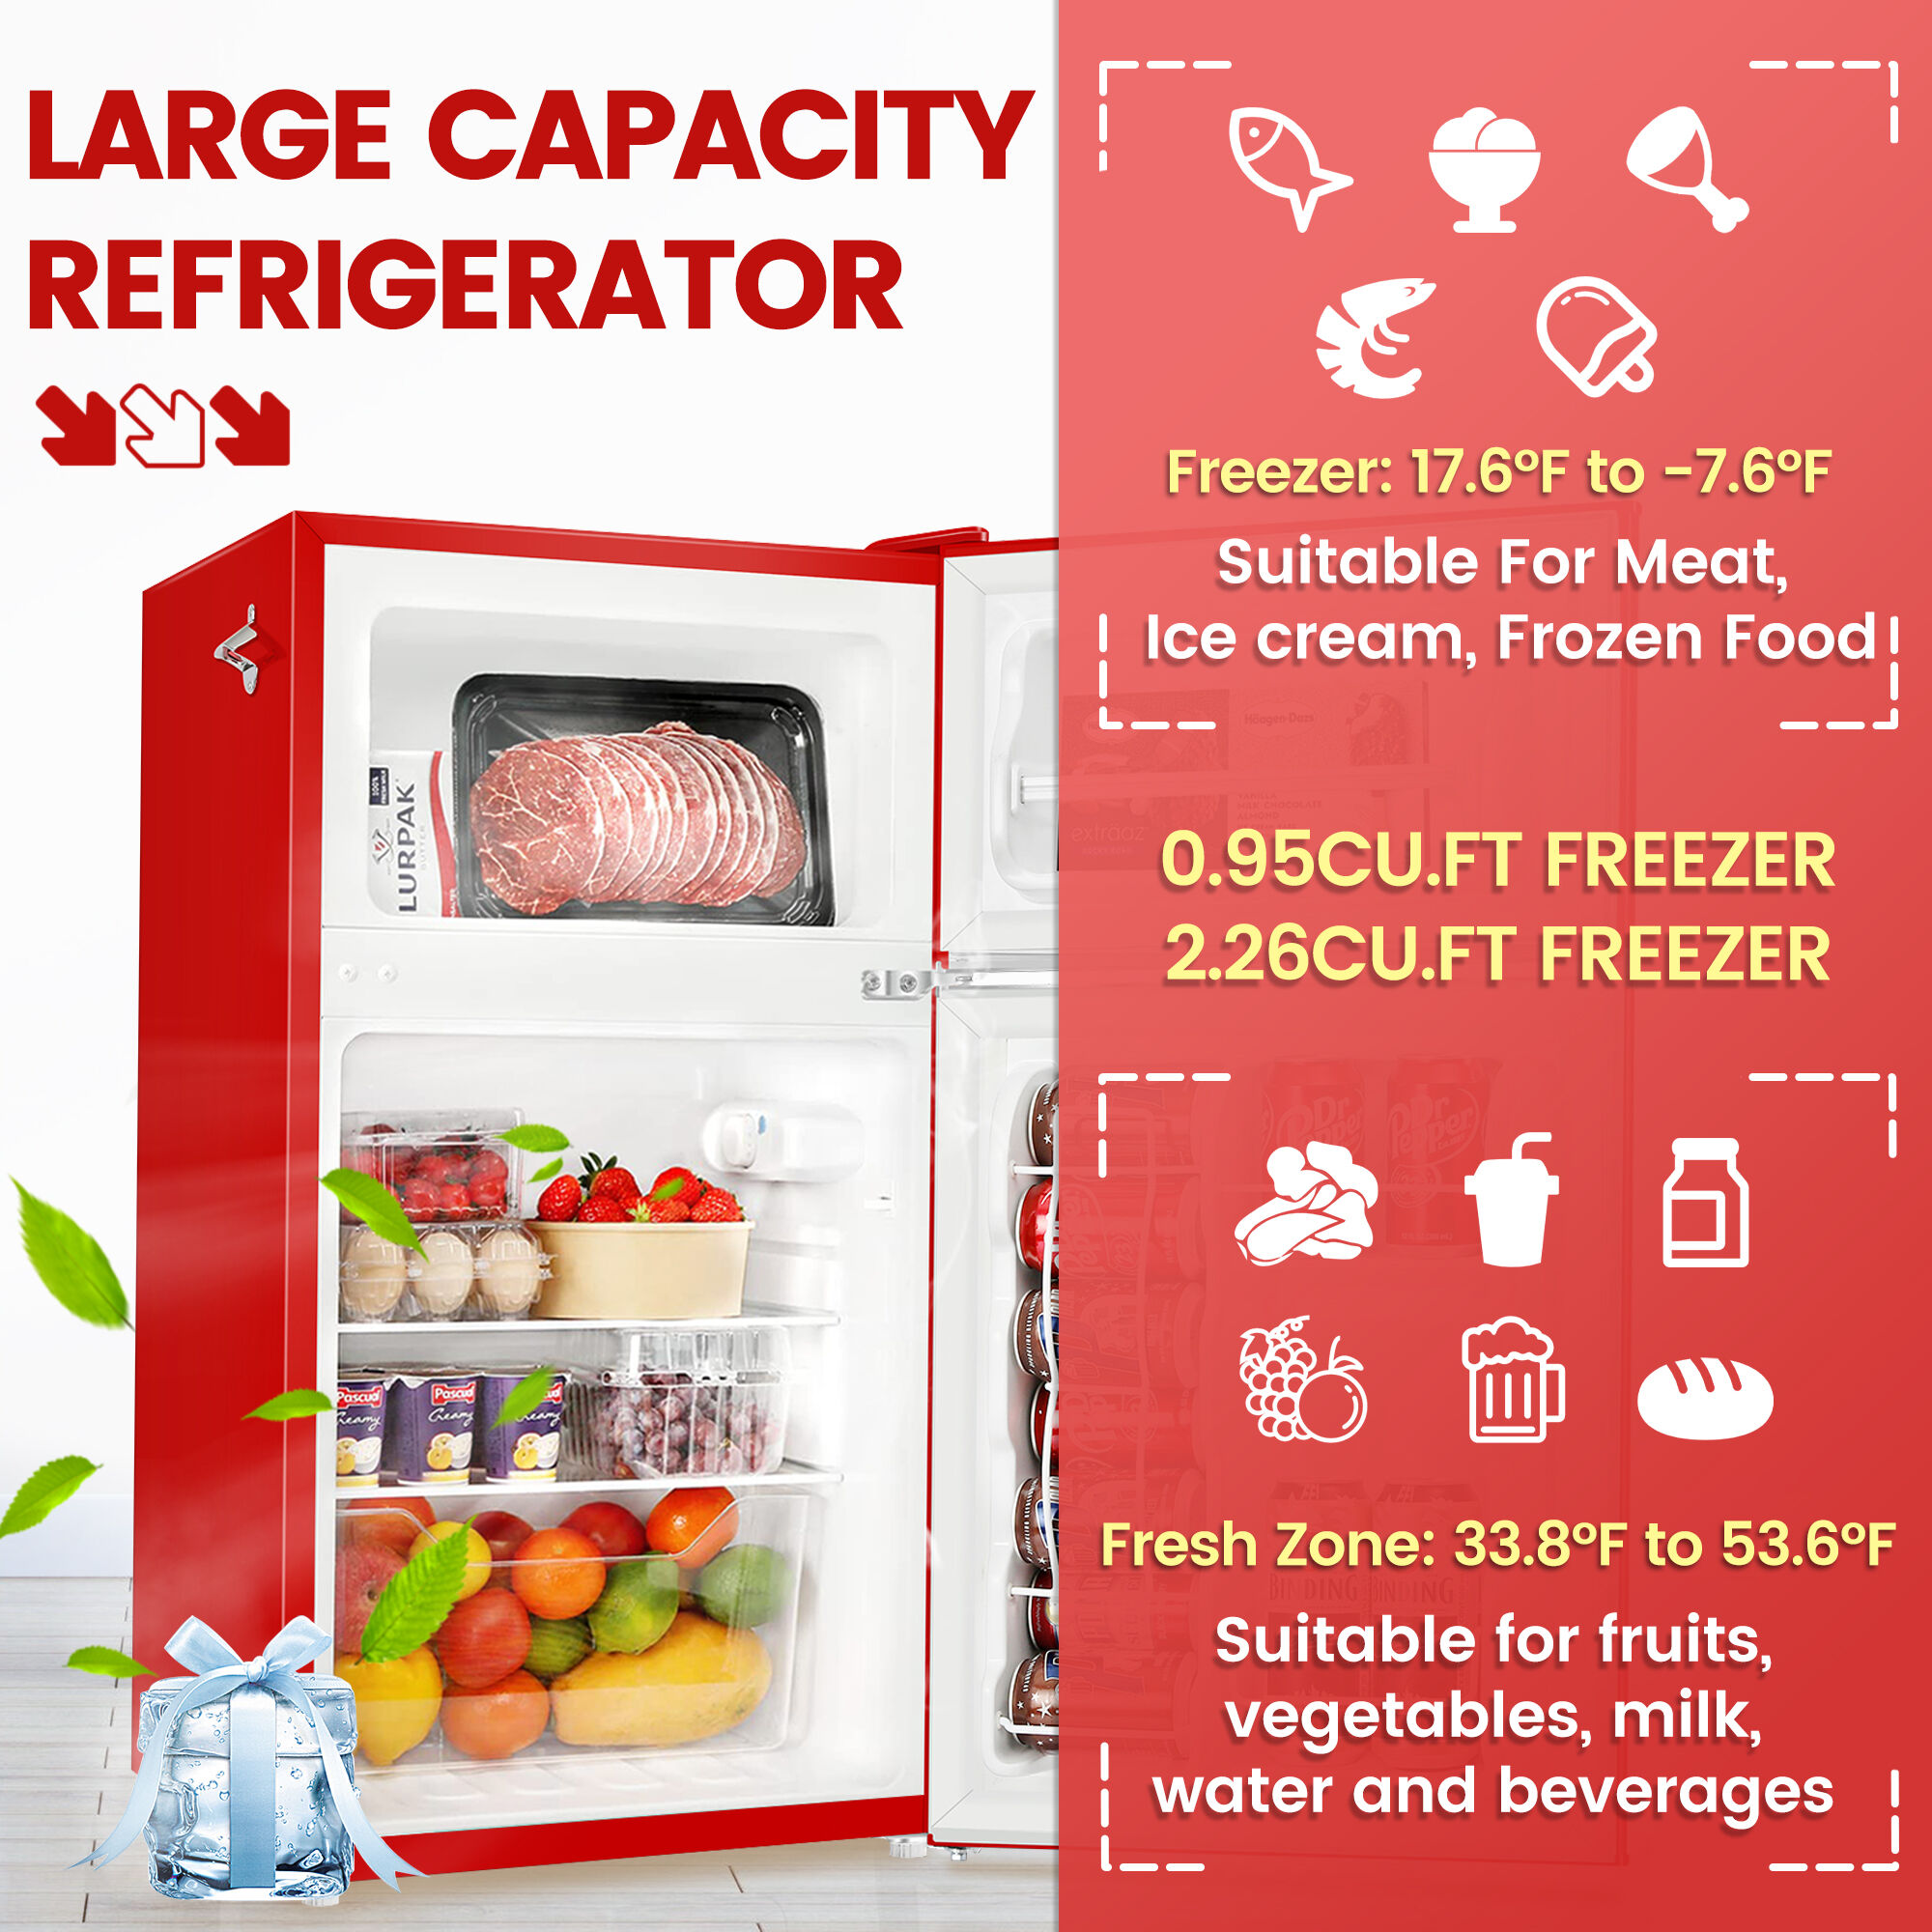 JEREMY CASS 3.5 cu. ft. Compact Refrigerator Mini Fridge in Wood